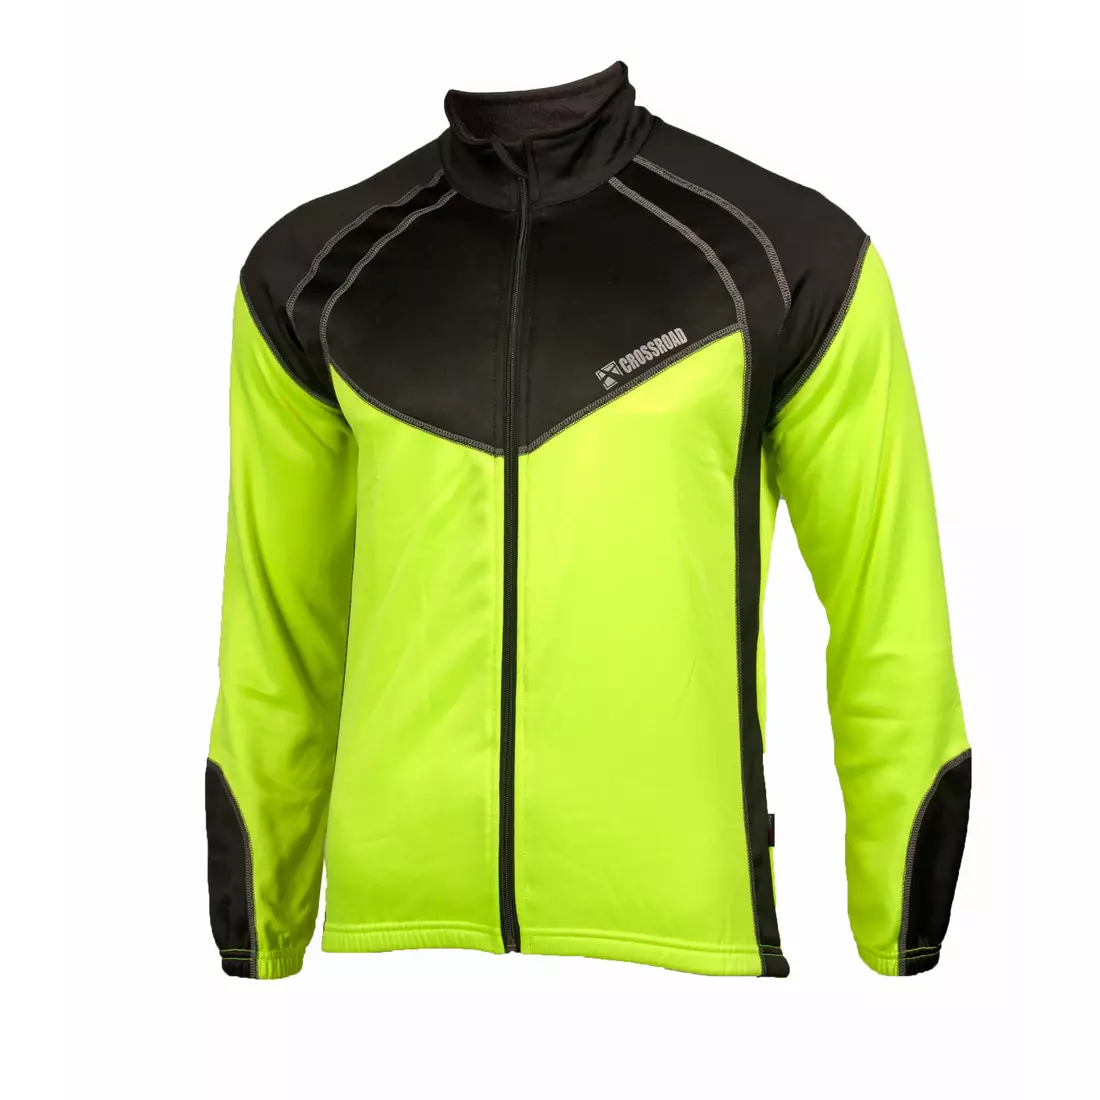 CROSSROAD KENT warmes Fahrrad-Sweatshirt, Schwarz und Fluor